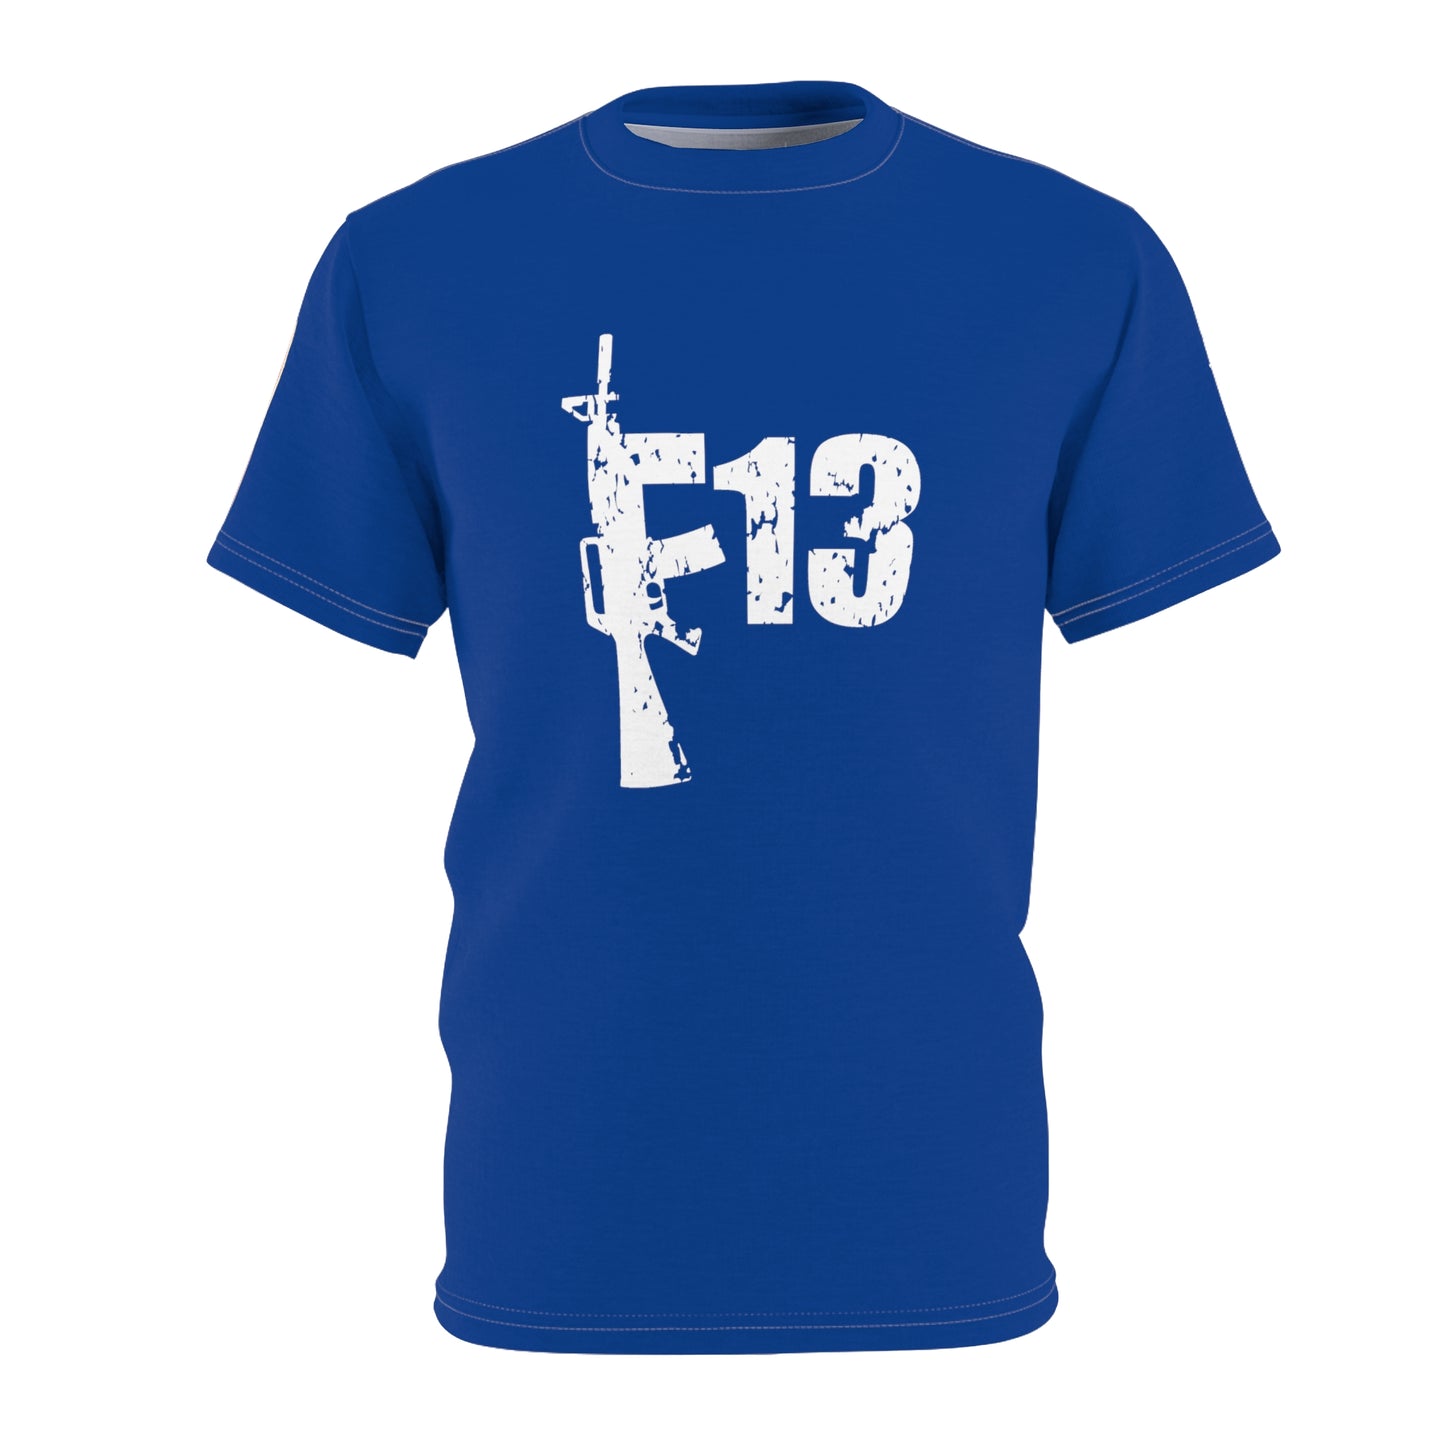 Unisex Cut & Sew Tee (AOP) F13 w flag and rifles on blue